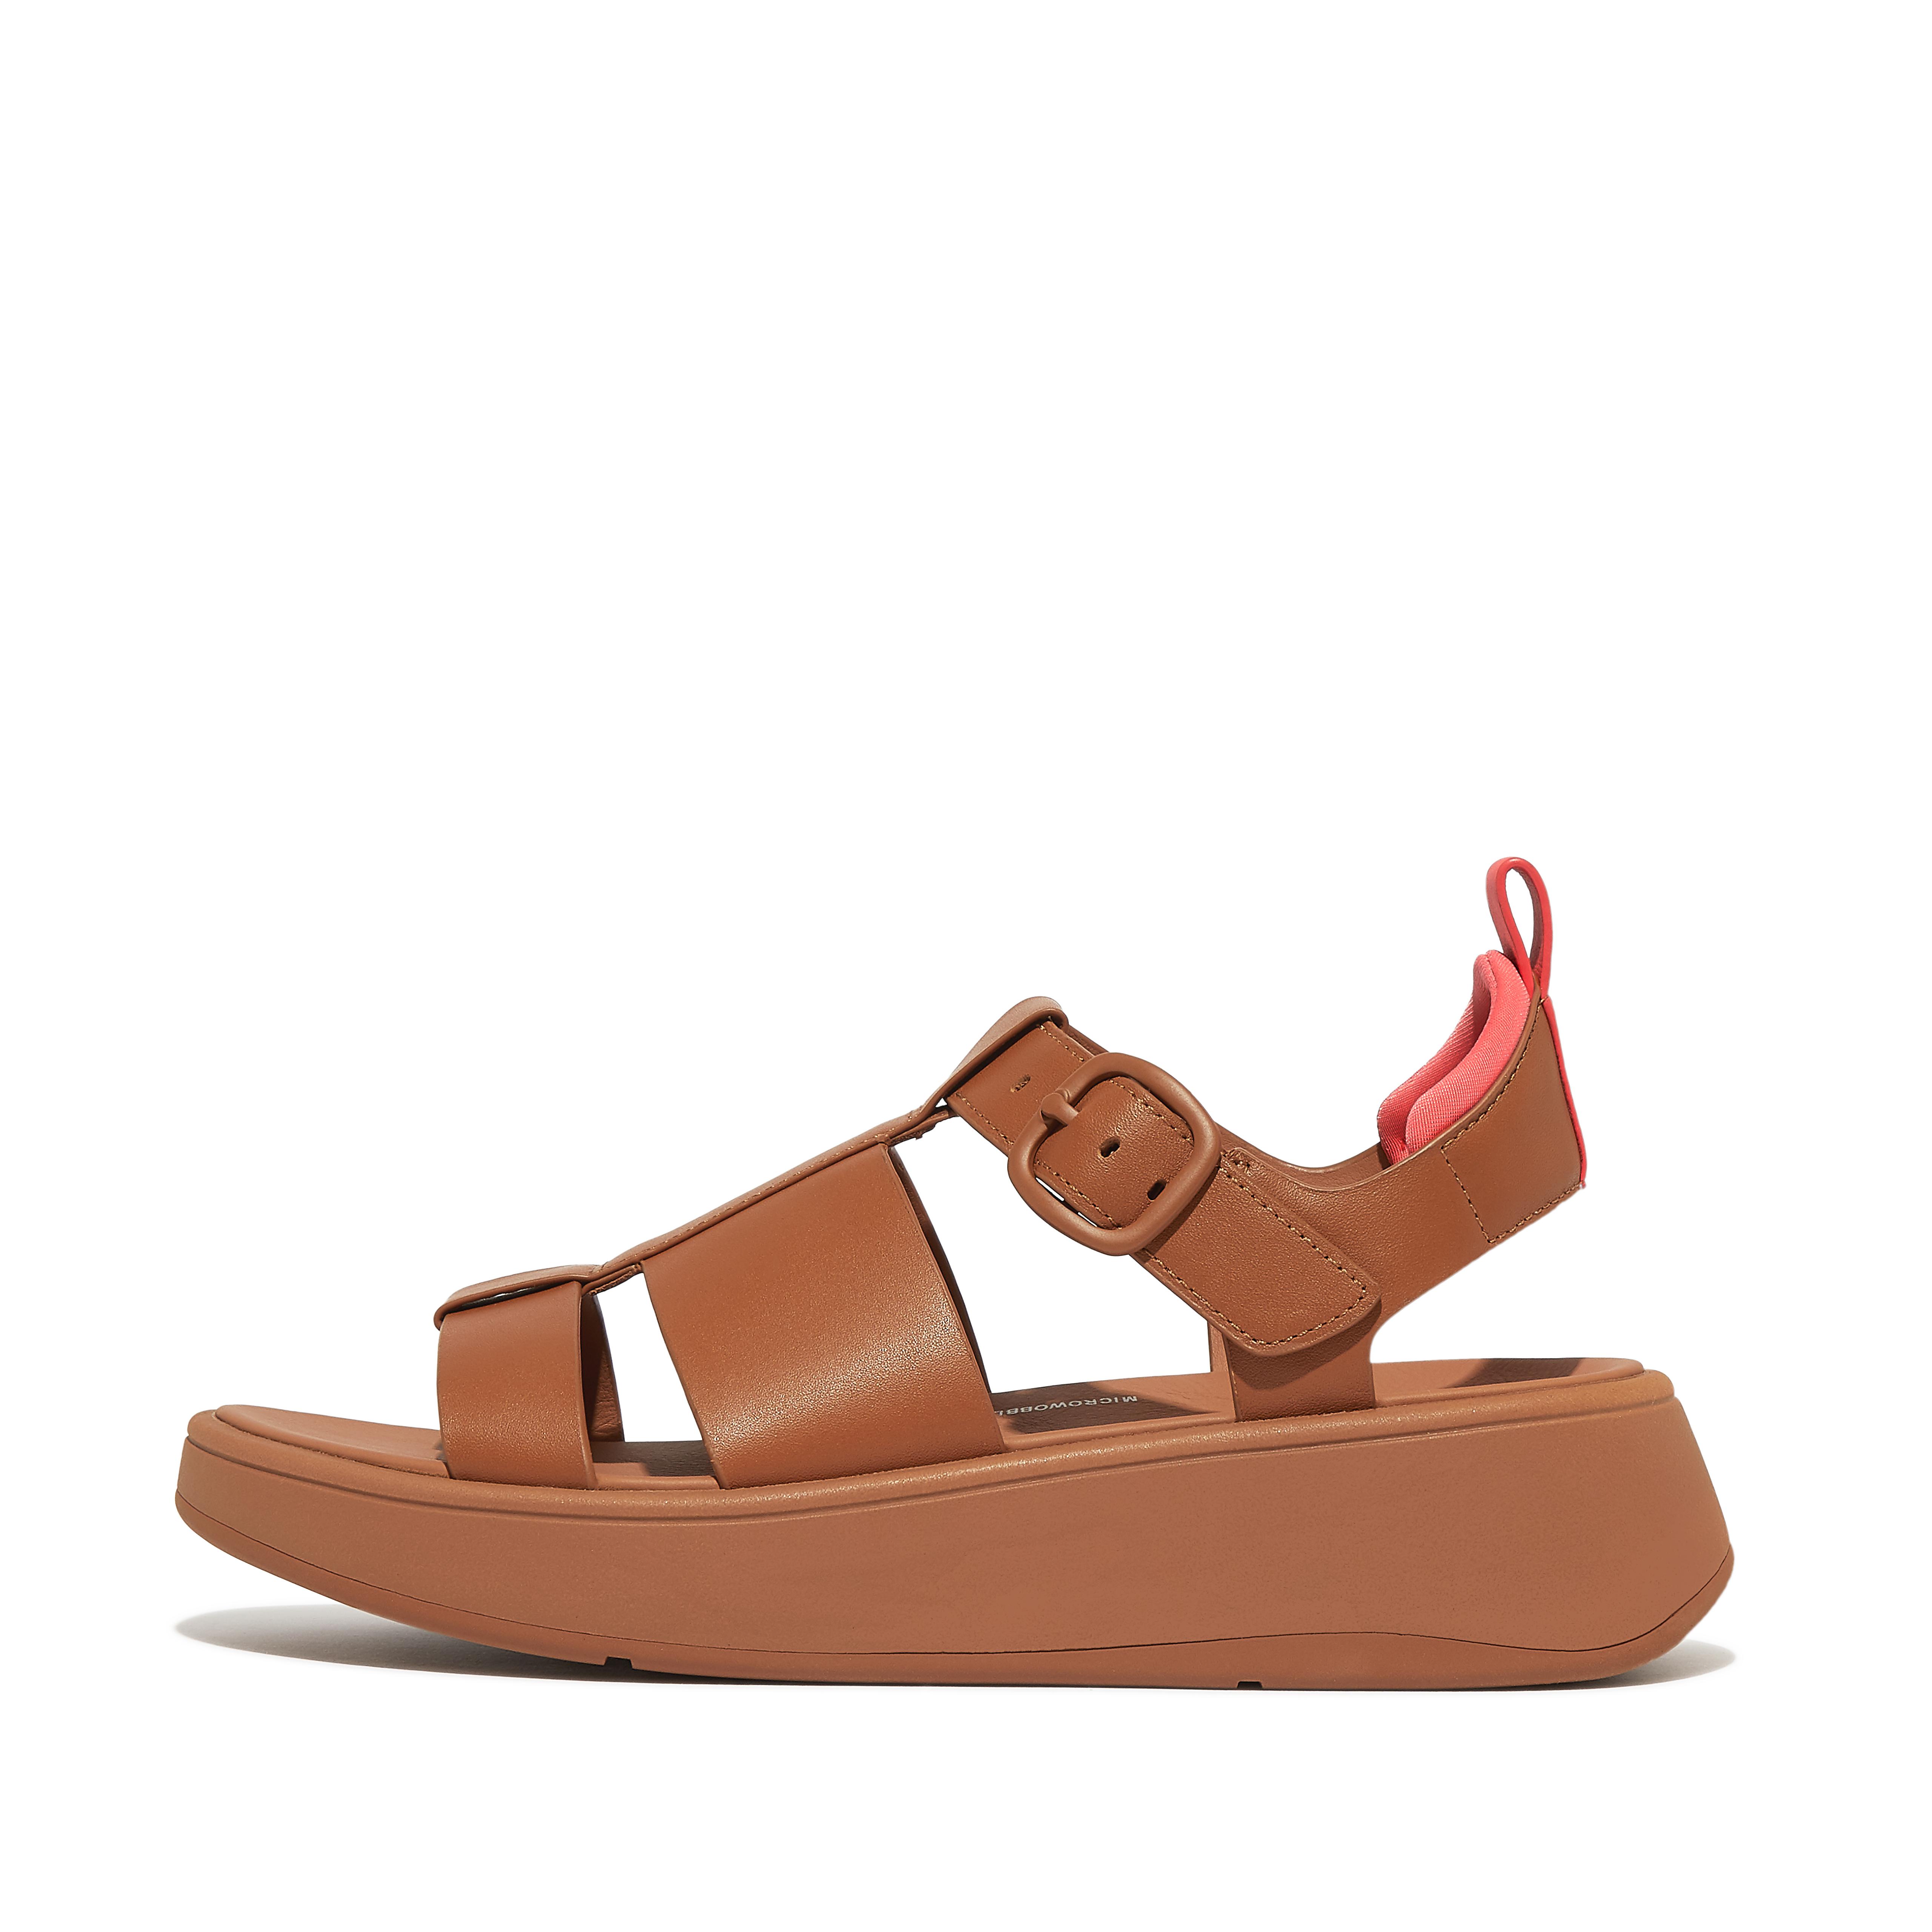 Fitflop Leather Flatform Fisherman Sandals,Light Tan/Coral